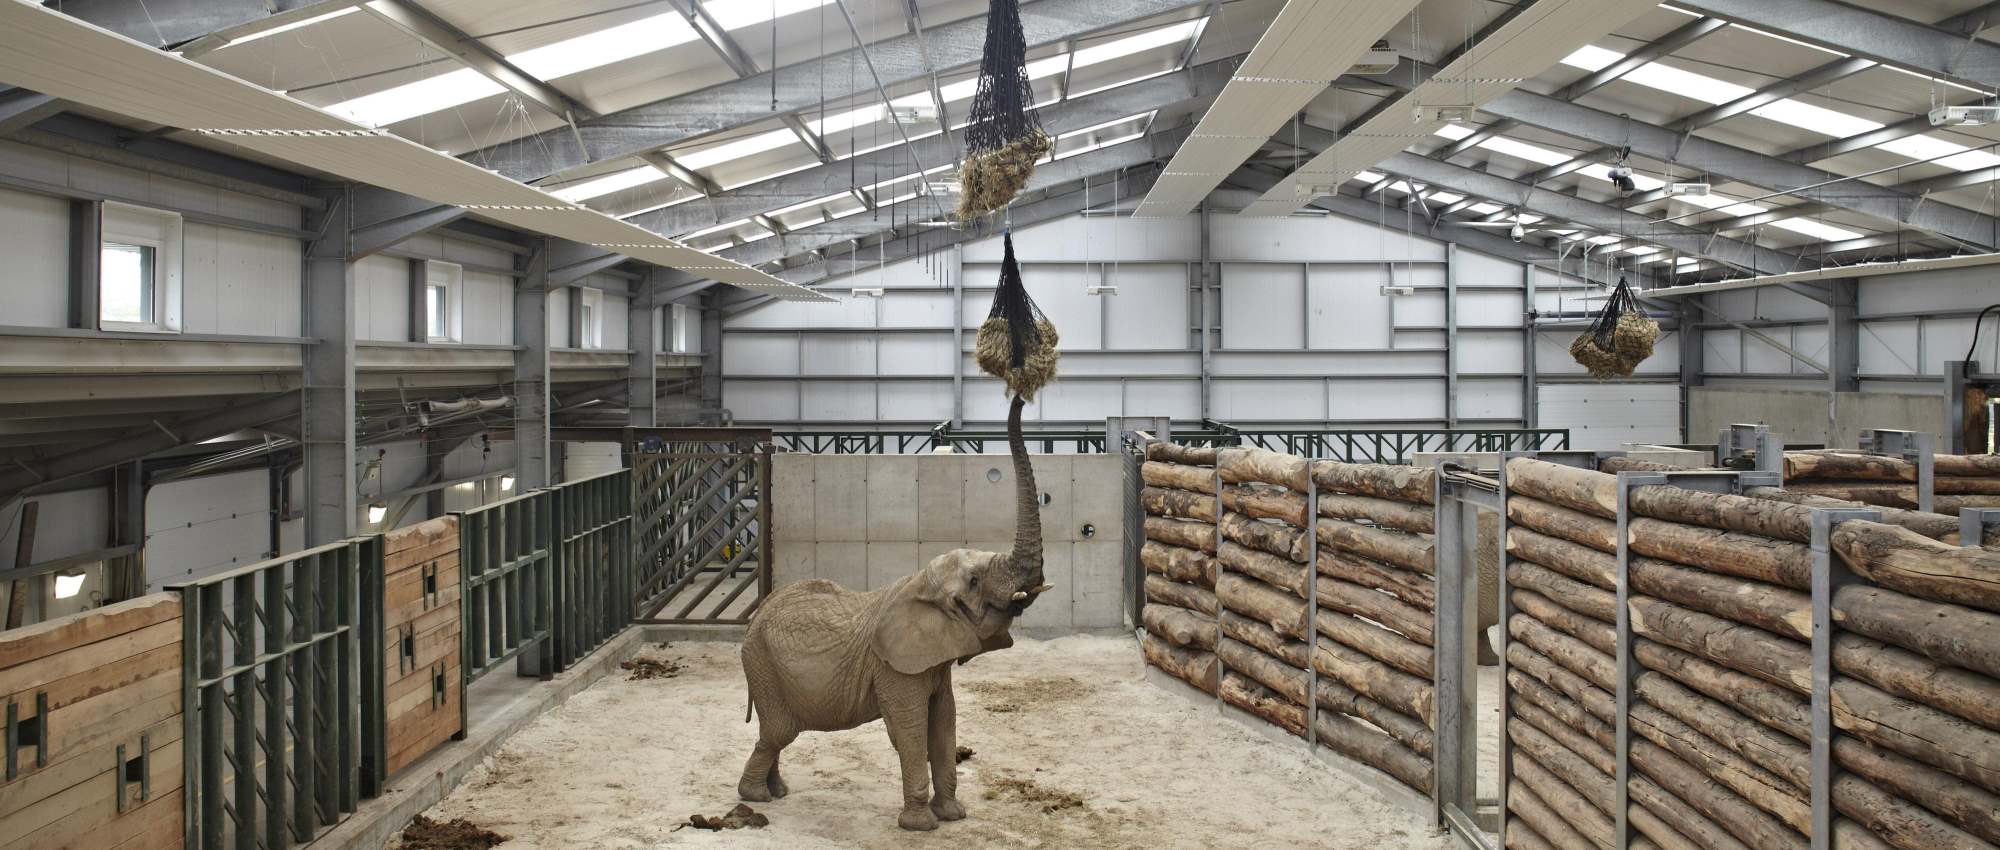 Case Study Safari so good as Steadmans materials help create new elephant house